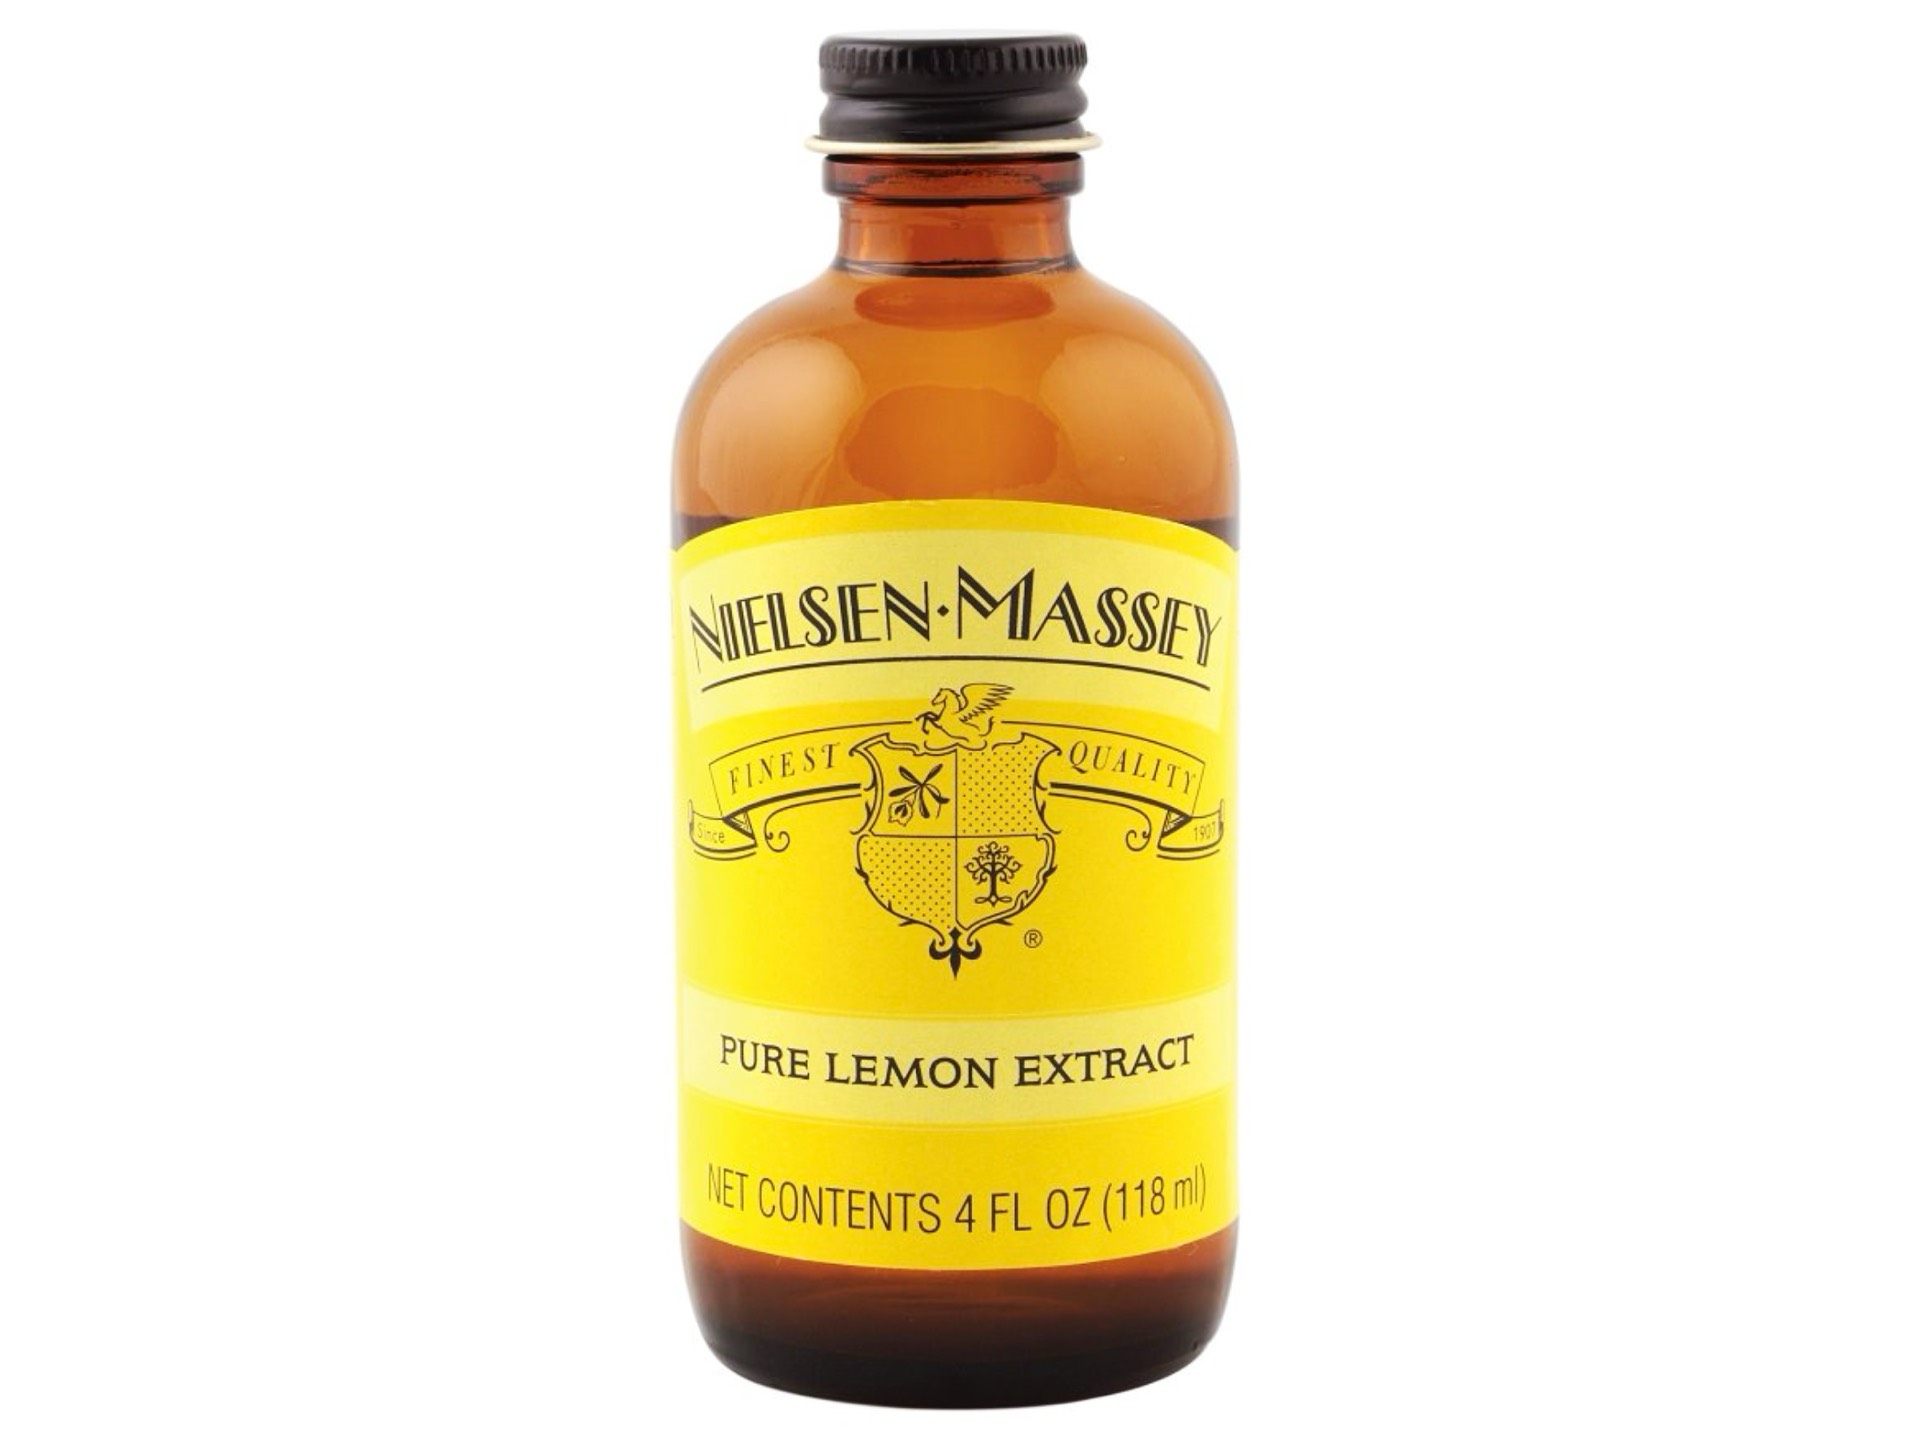 nielsen-massey-pure-lemon-extract